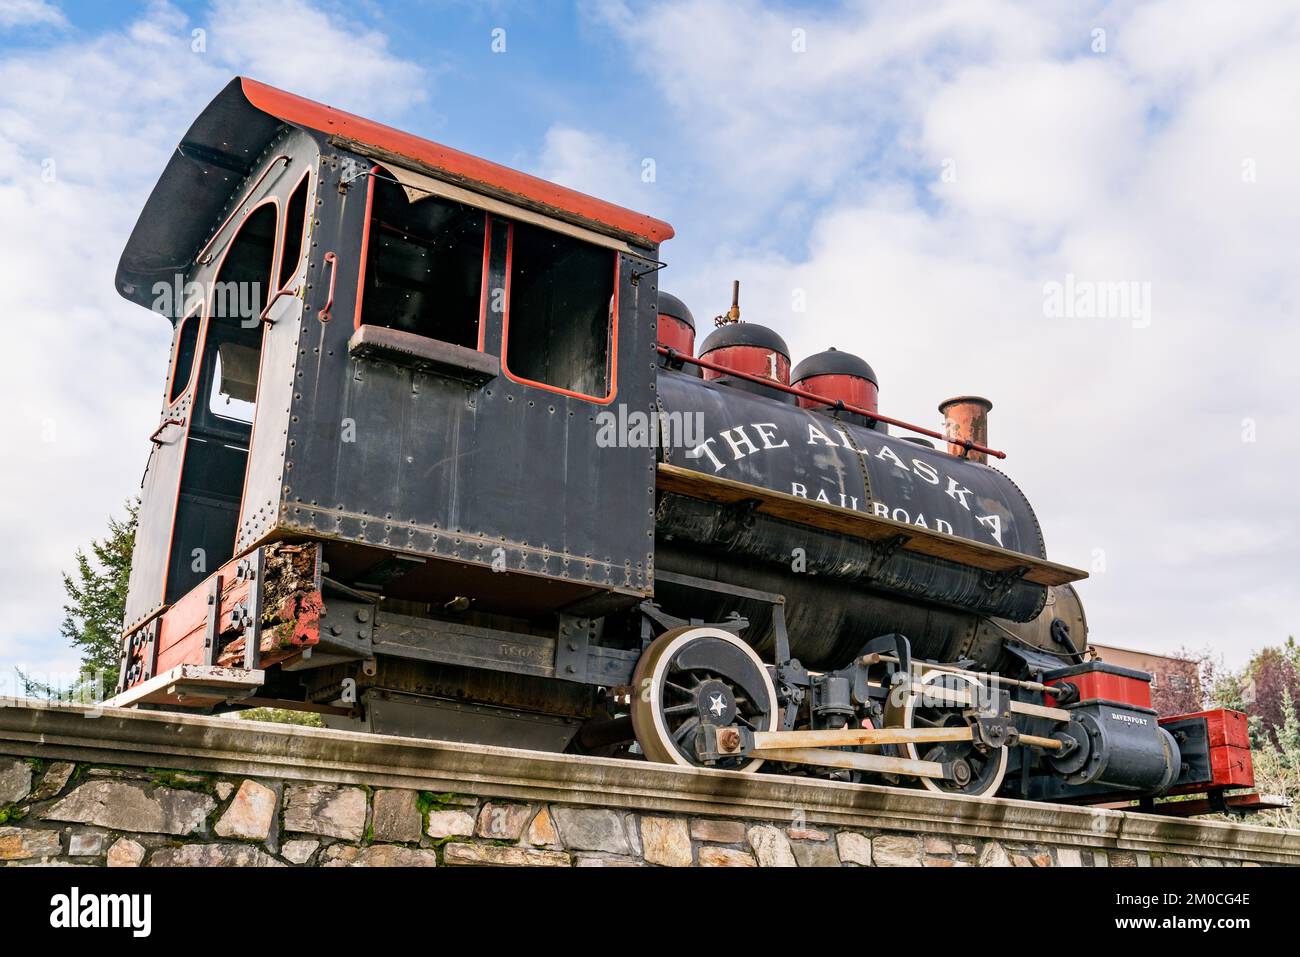 Anchorage, AK - 4. September 2022: Alte antike Alaska Railroad Locomotive Nummer 1 außerhalb des Anchorage Railroad Depot Stockfoto